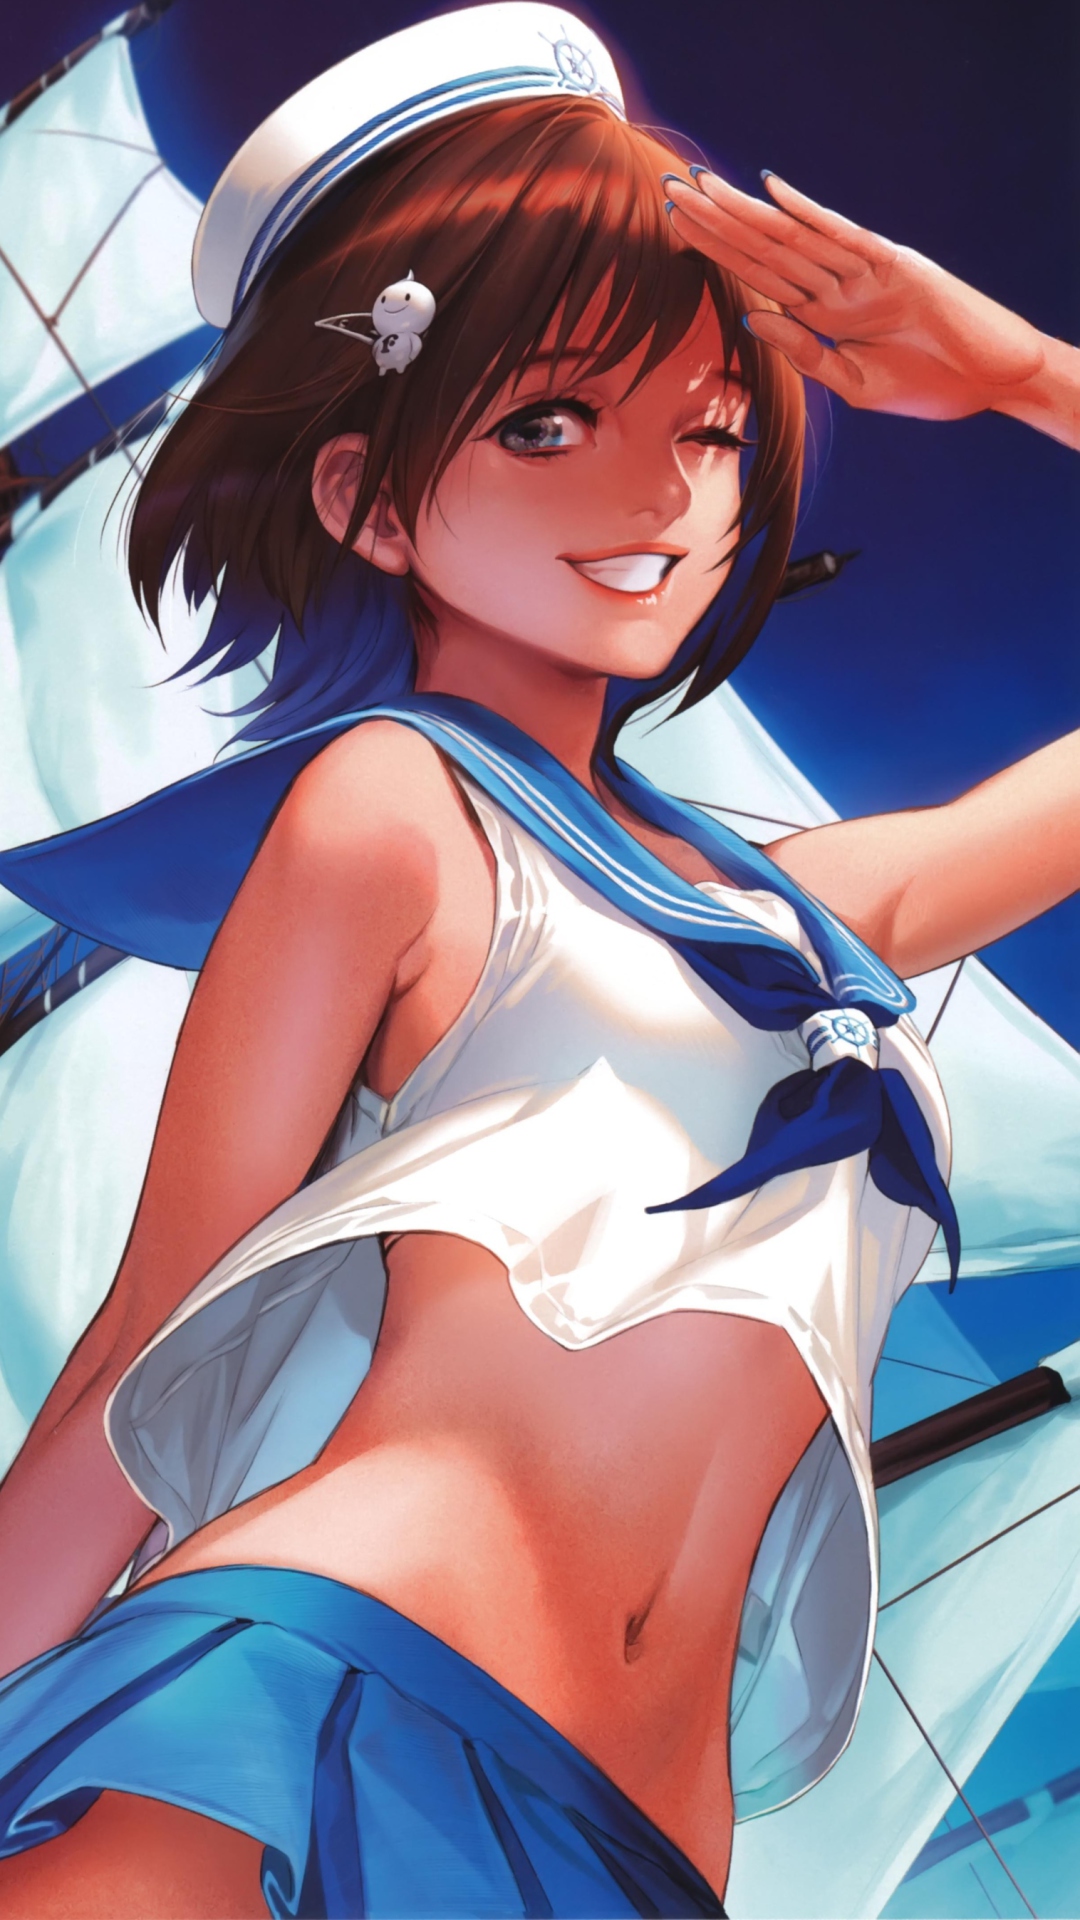 Sailor Girl wallpaper 1080x1920